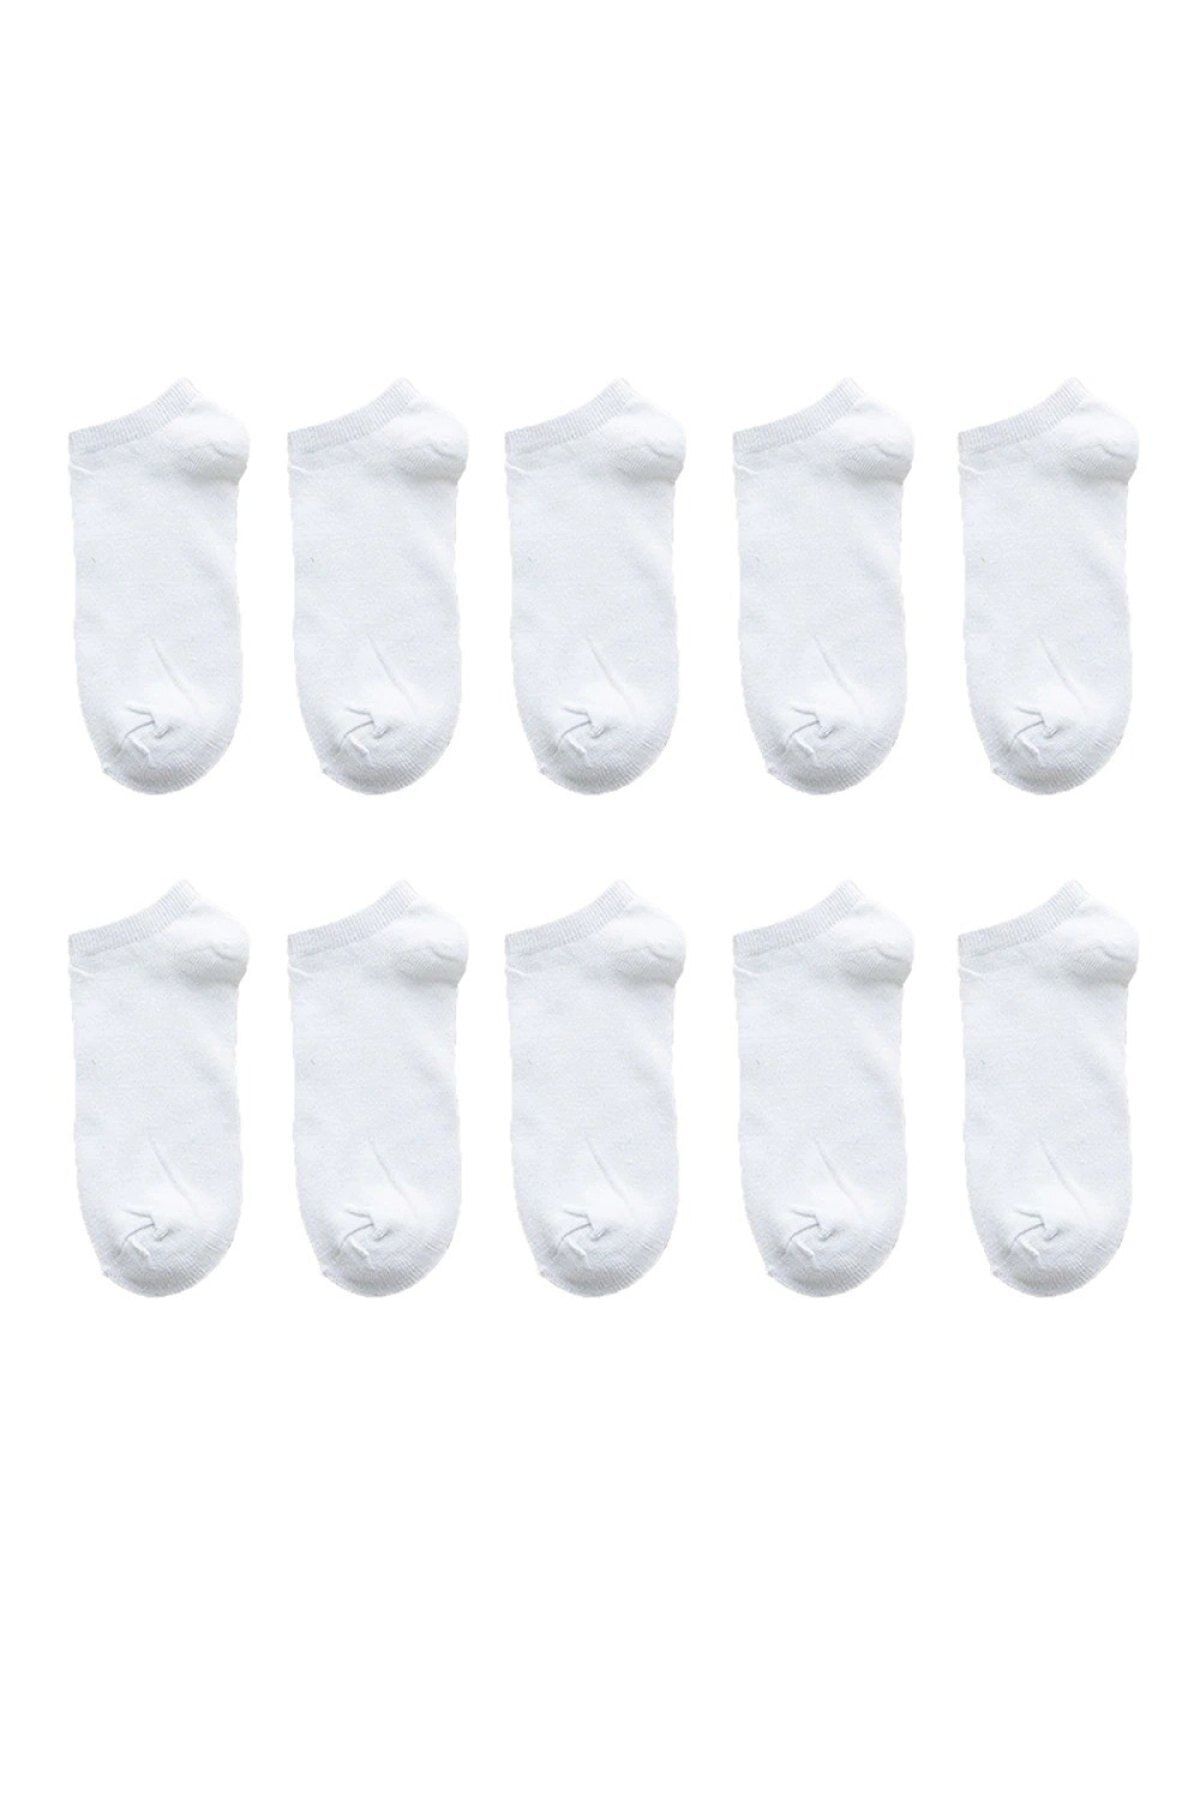 çorapmanya 10 Çift Pamuklu Erkek Krem Patik Çorap